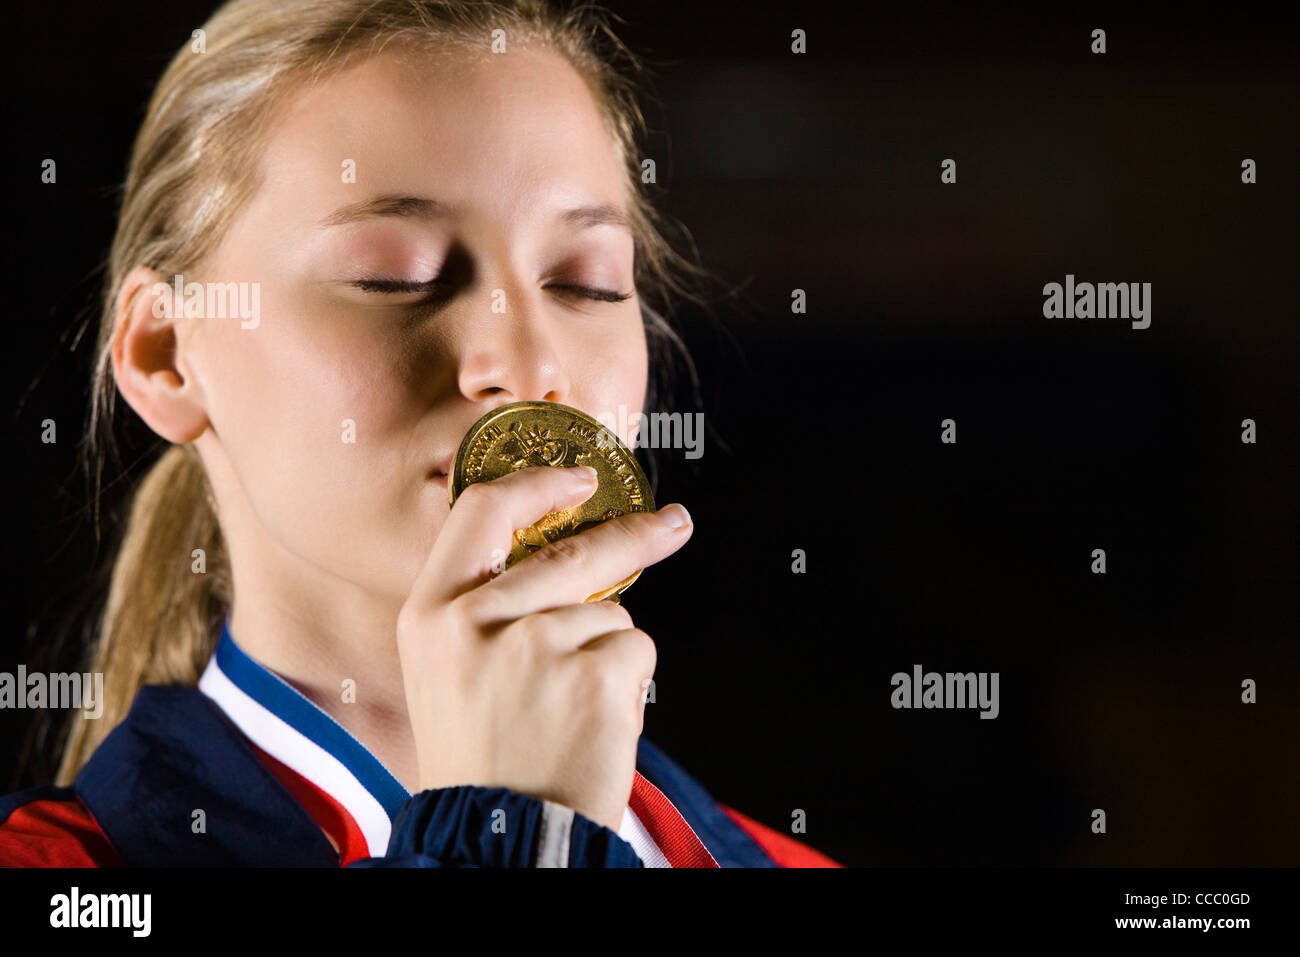 Female athlete kissing gold medal, portrait Stock Photo